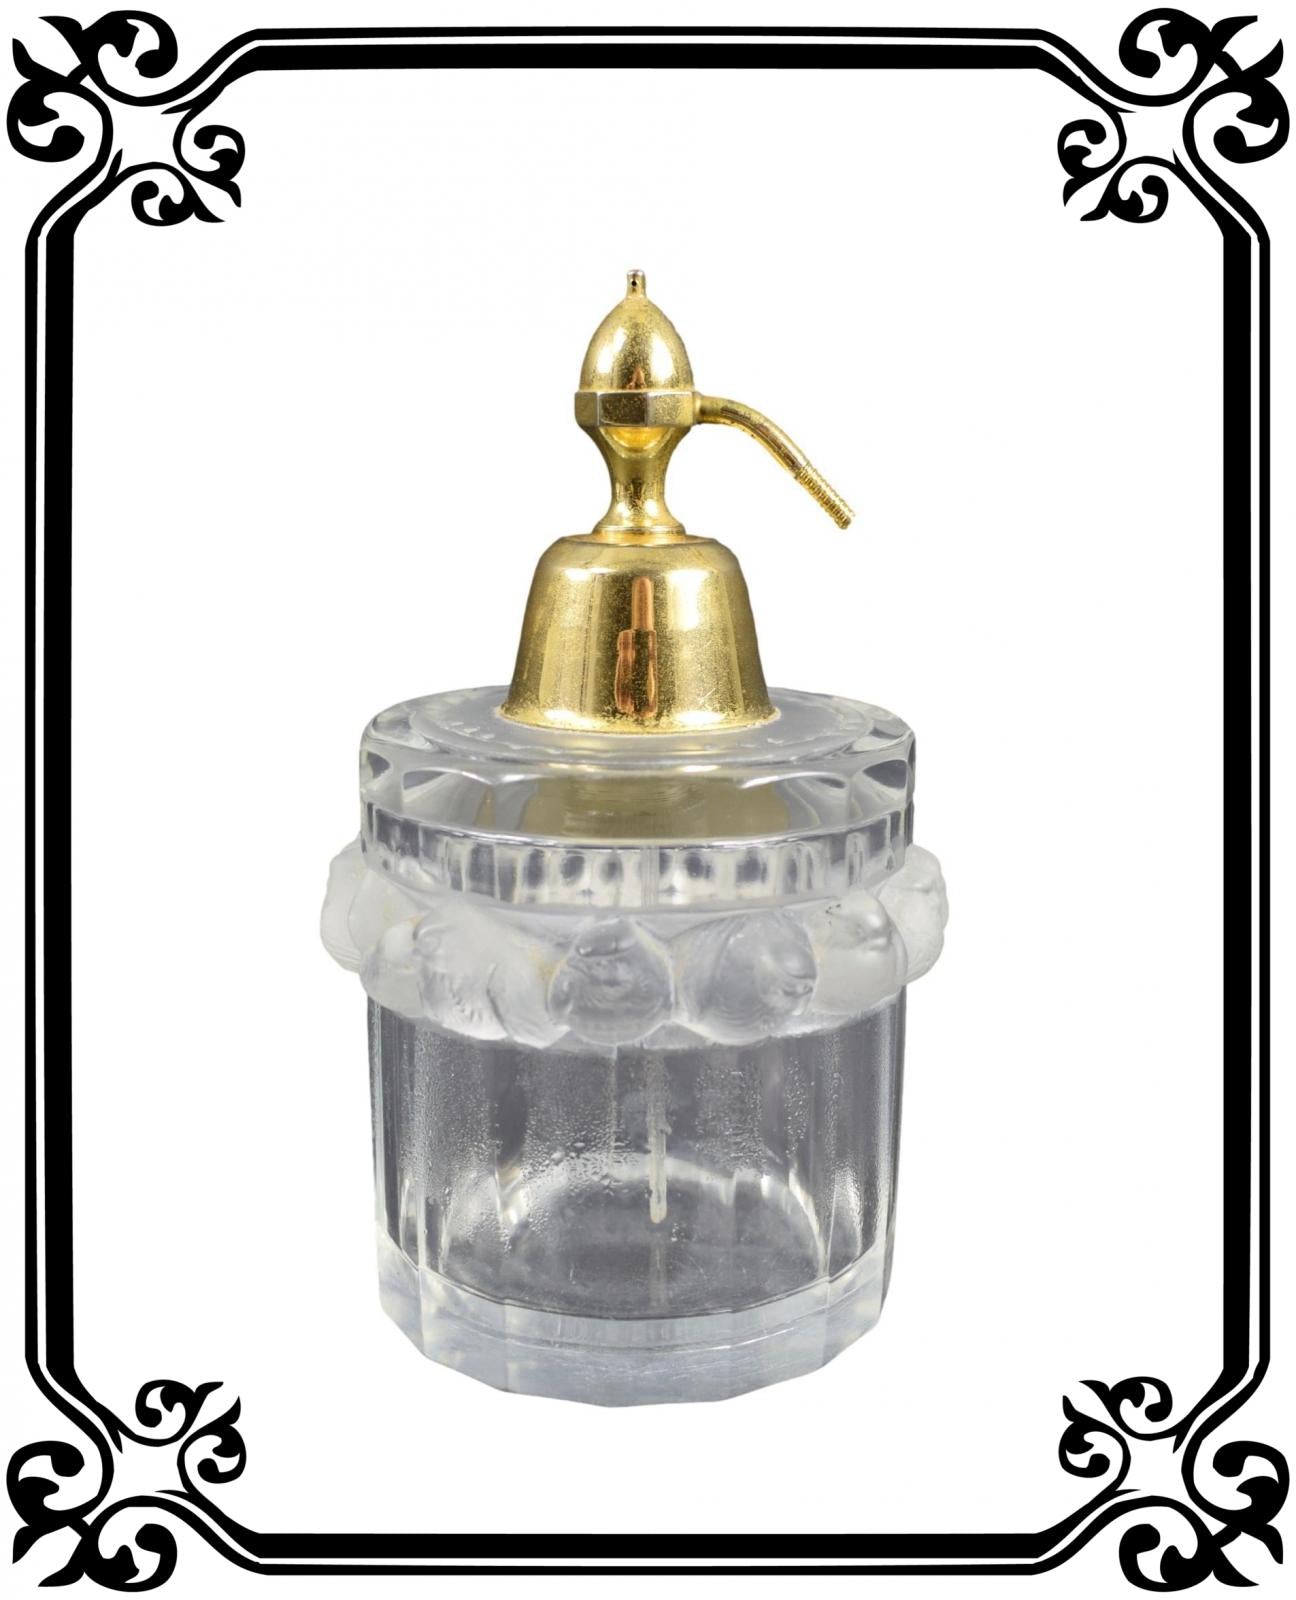 Perfume Bottle Model Robinson Lalique France